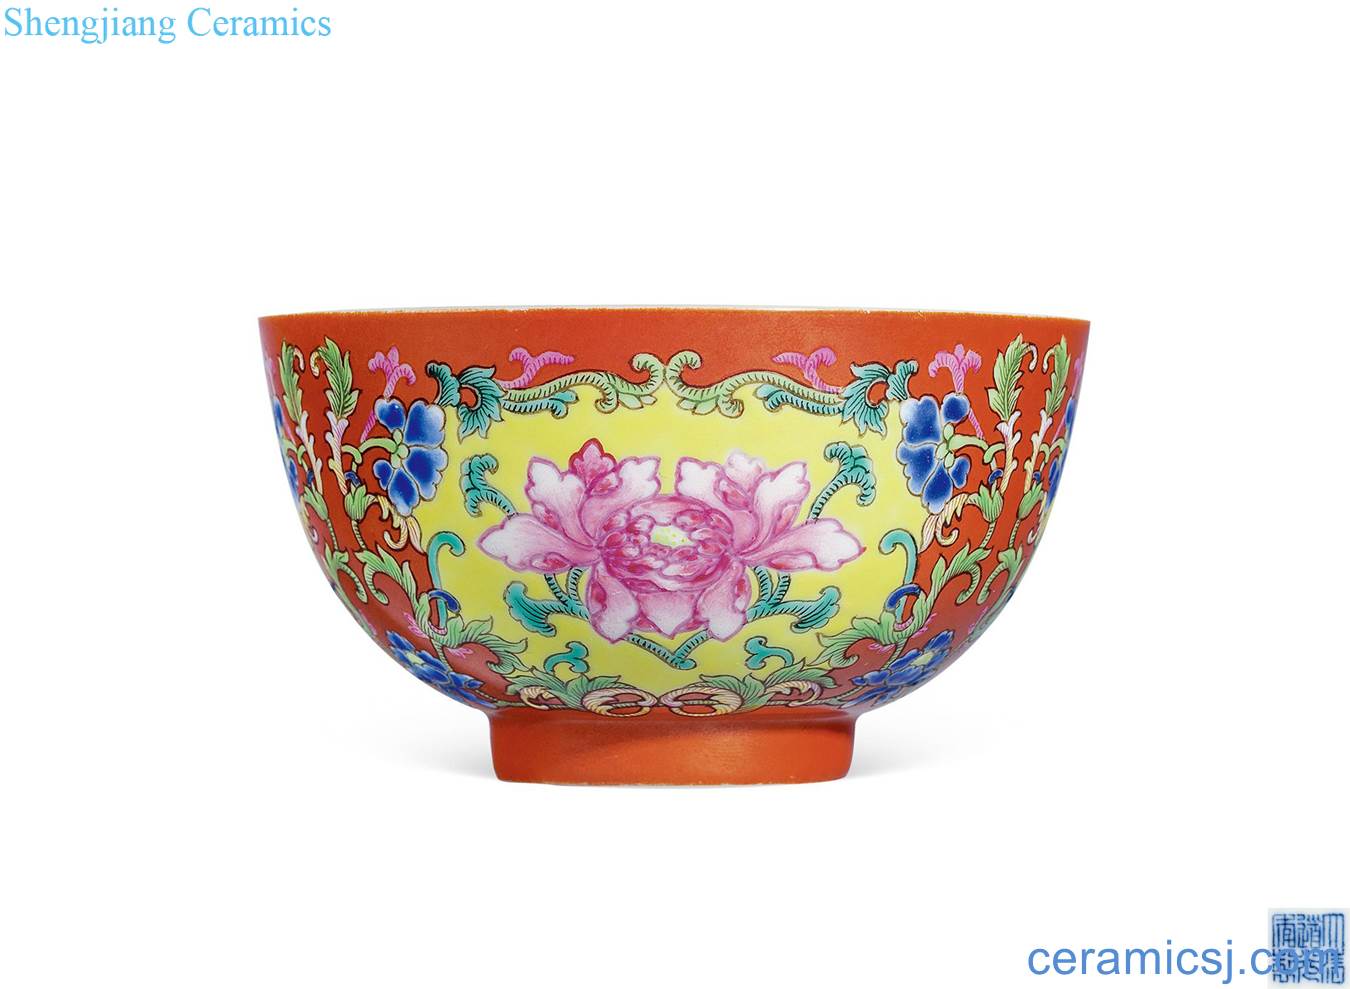 Qing daoguang Coral red famille rose medallion flowers green-splashed bowls